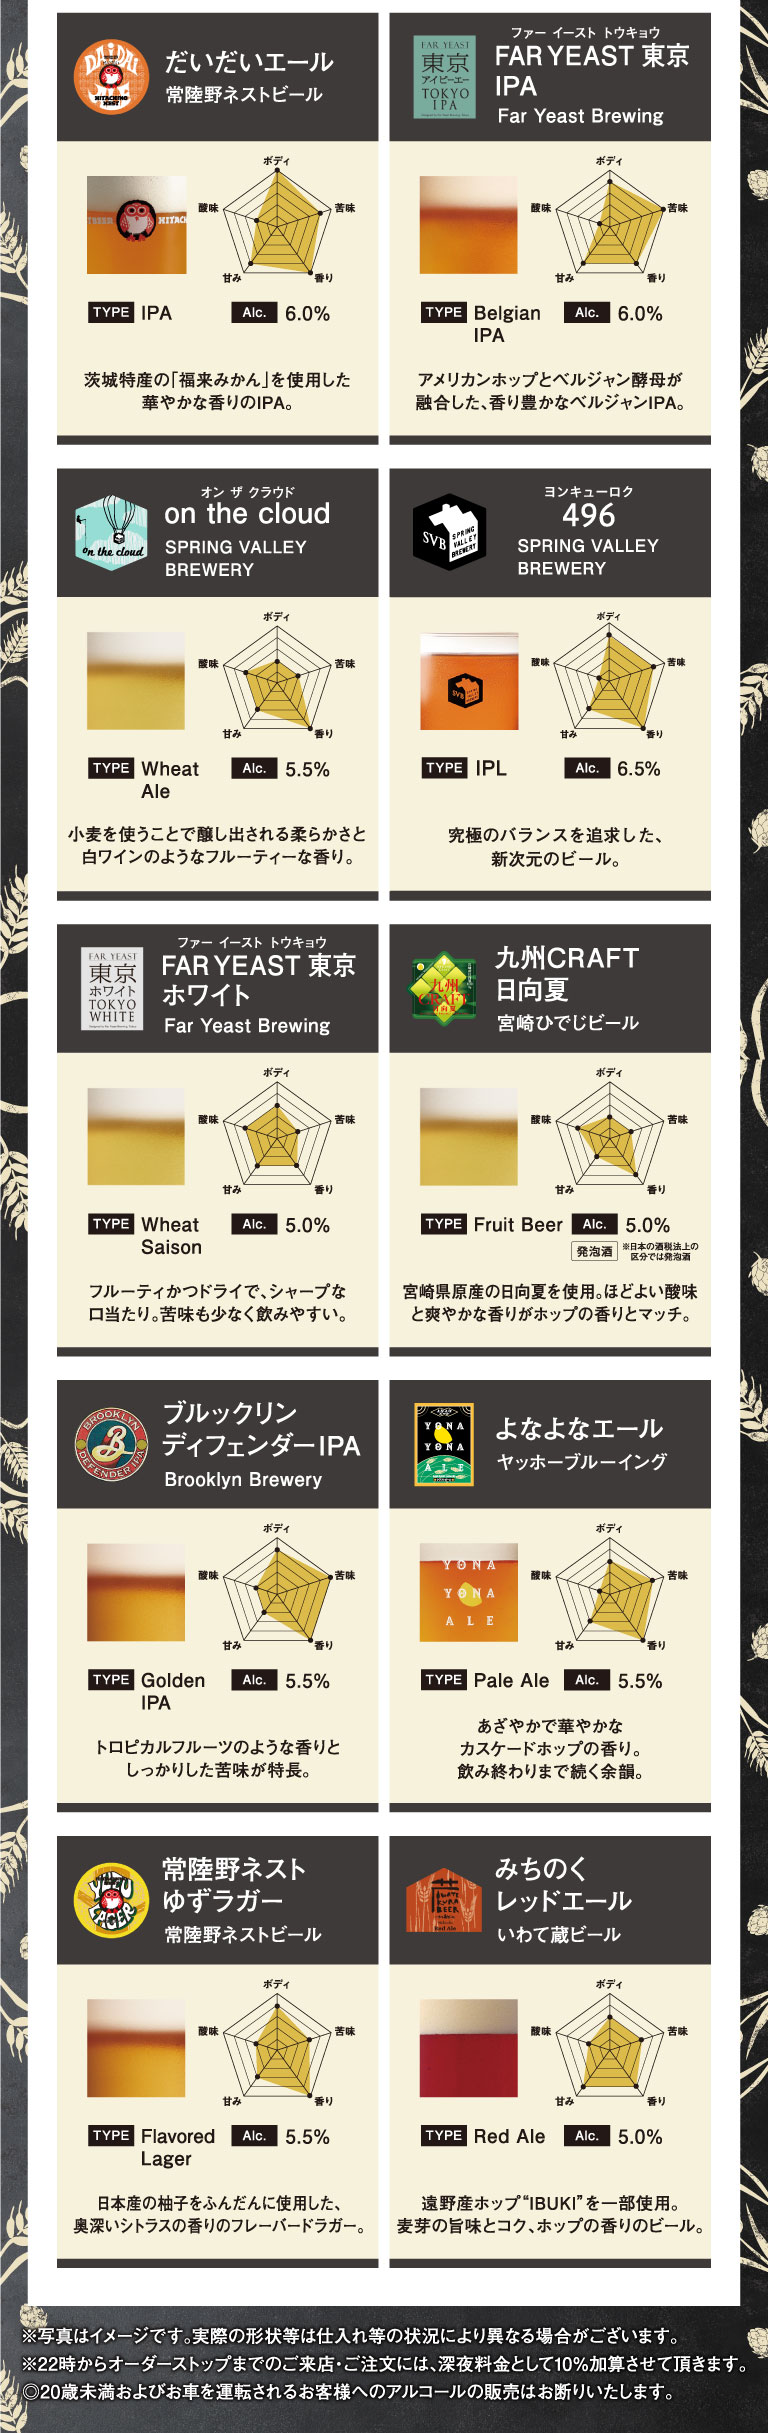 [Musashinomori Diner Limited] Craft Beer